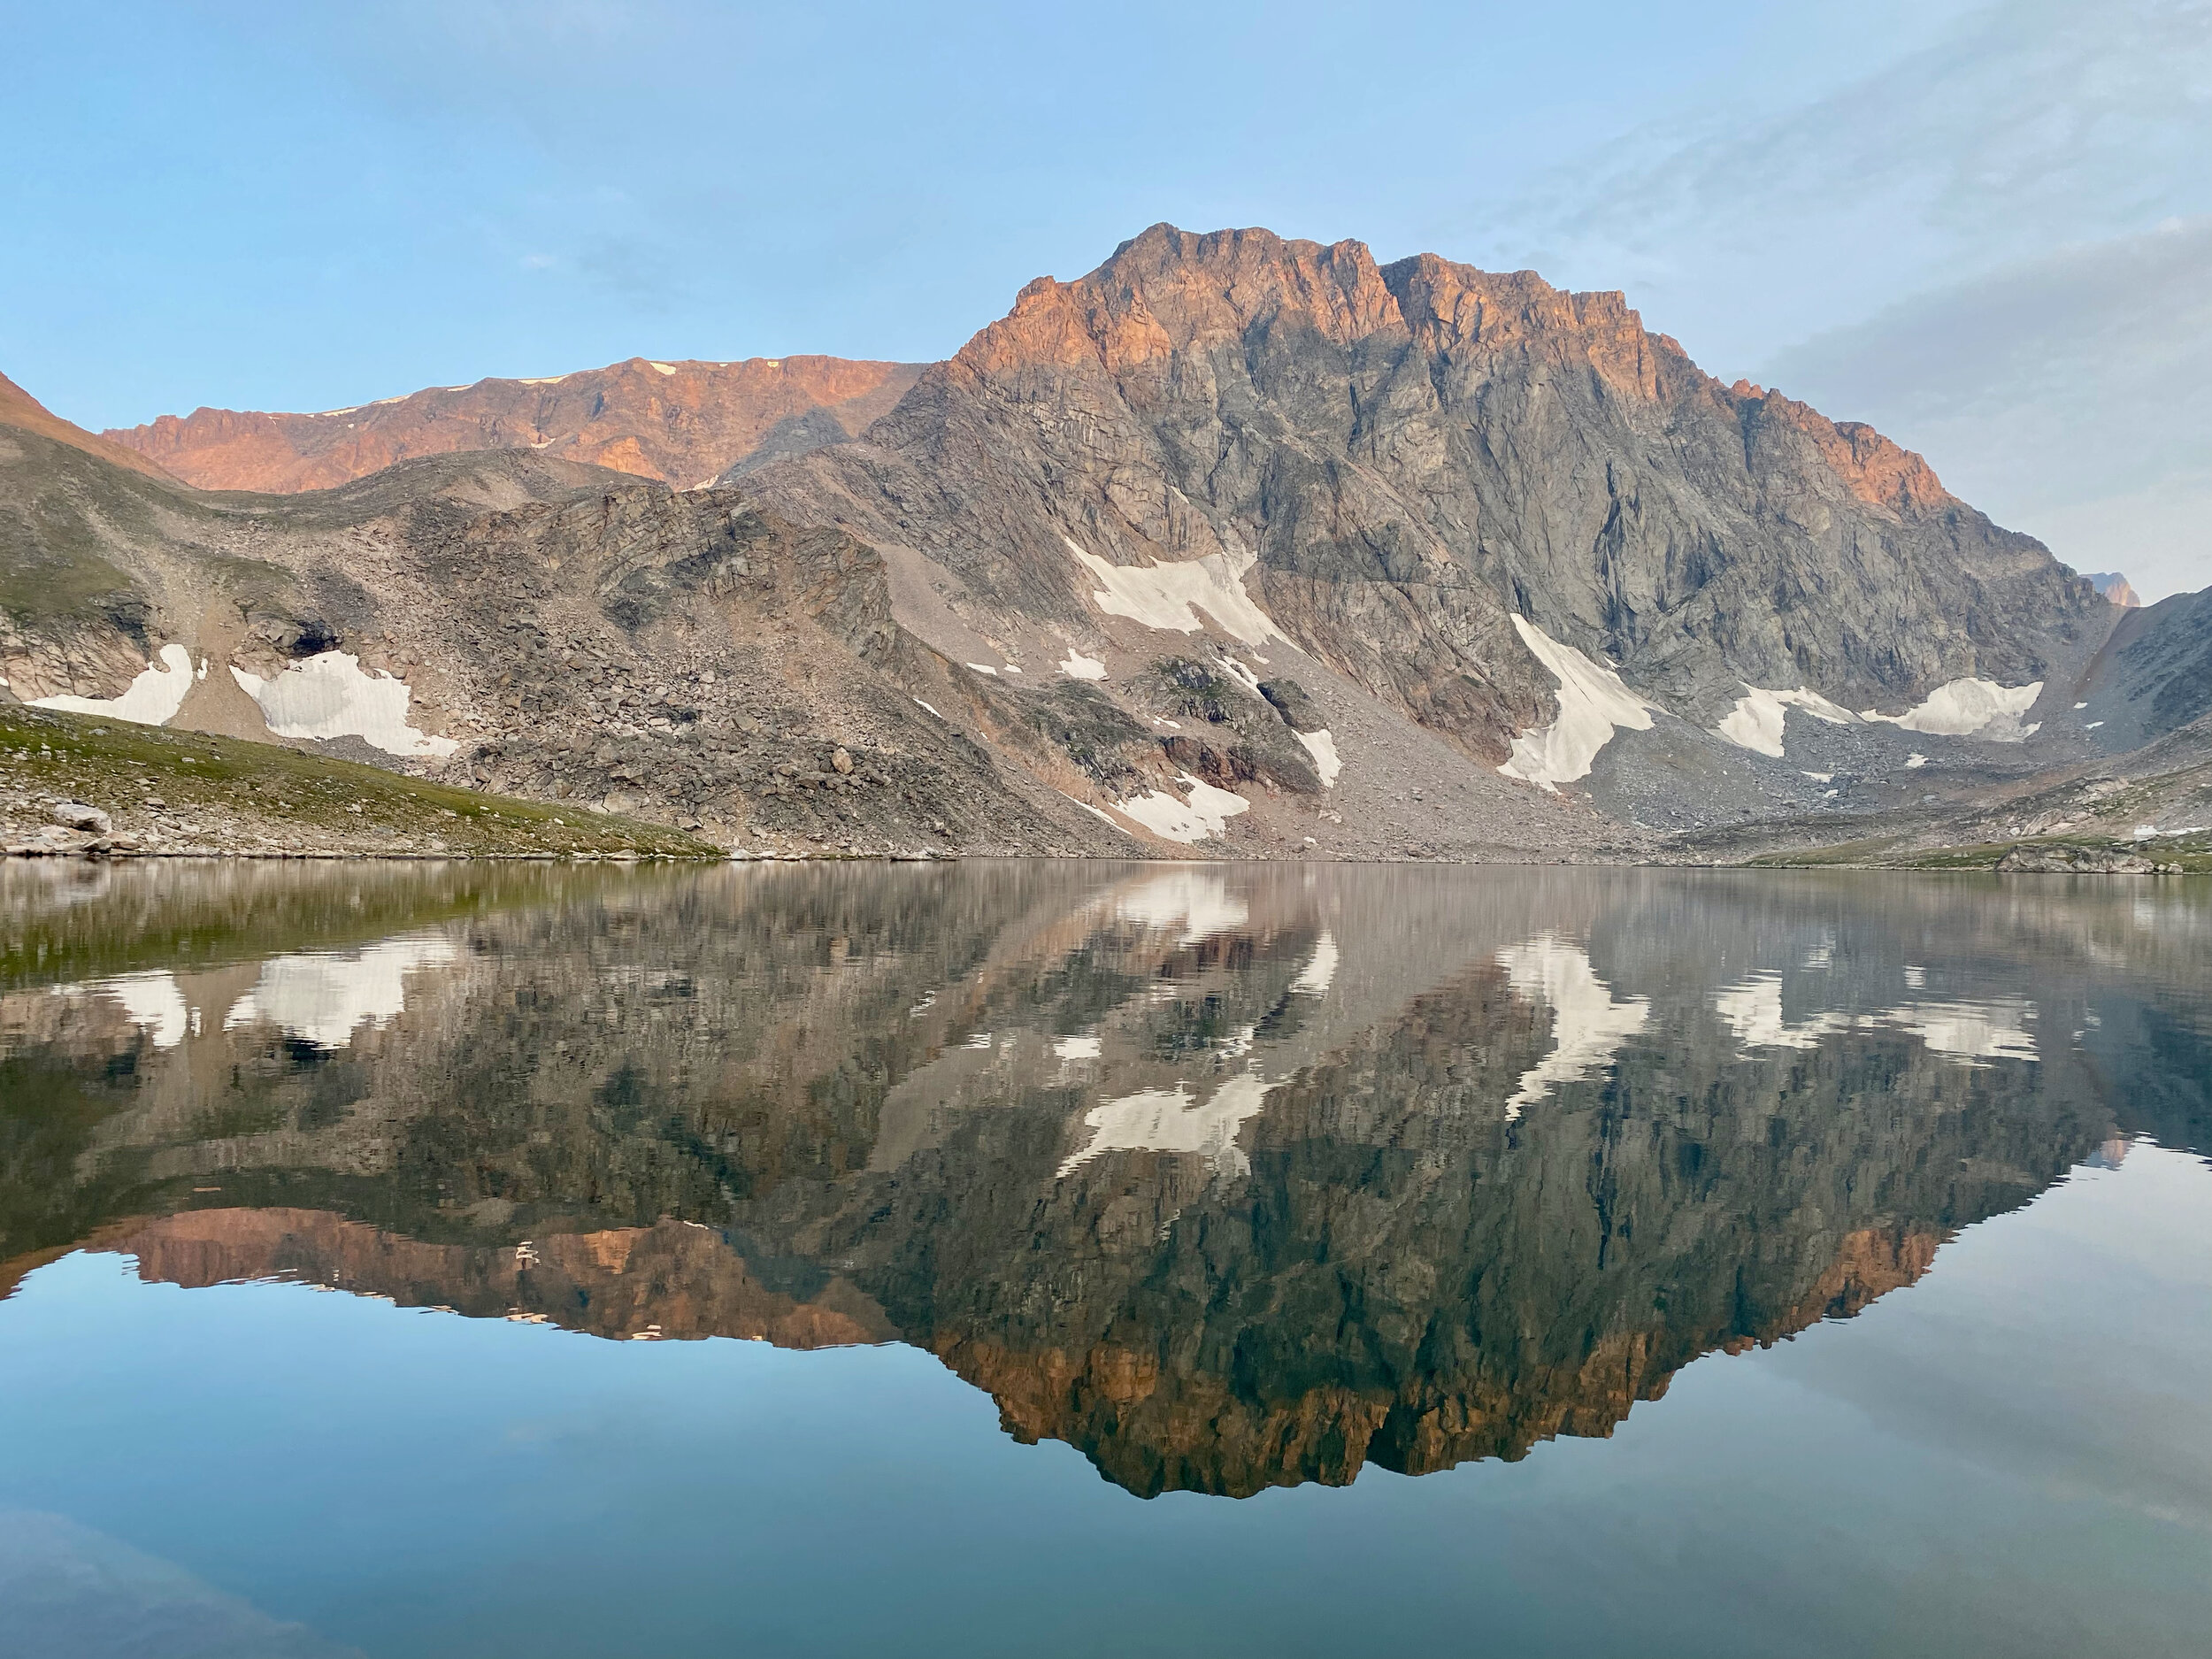 Reflection of Spirit Mountain on Moon Lake